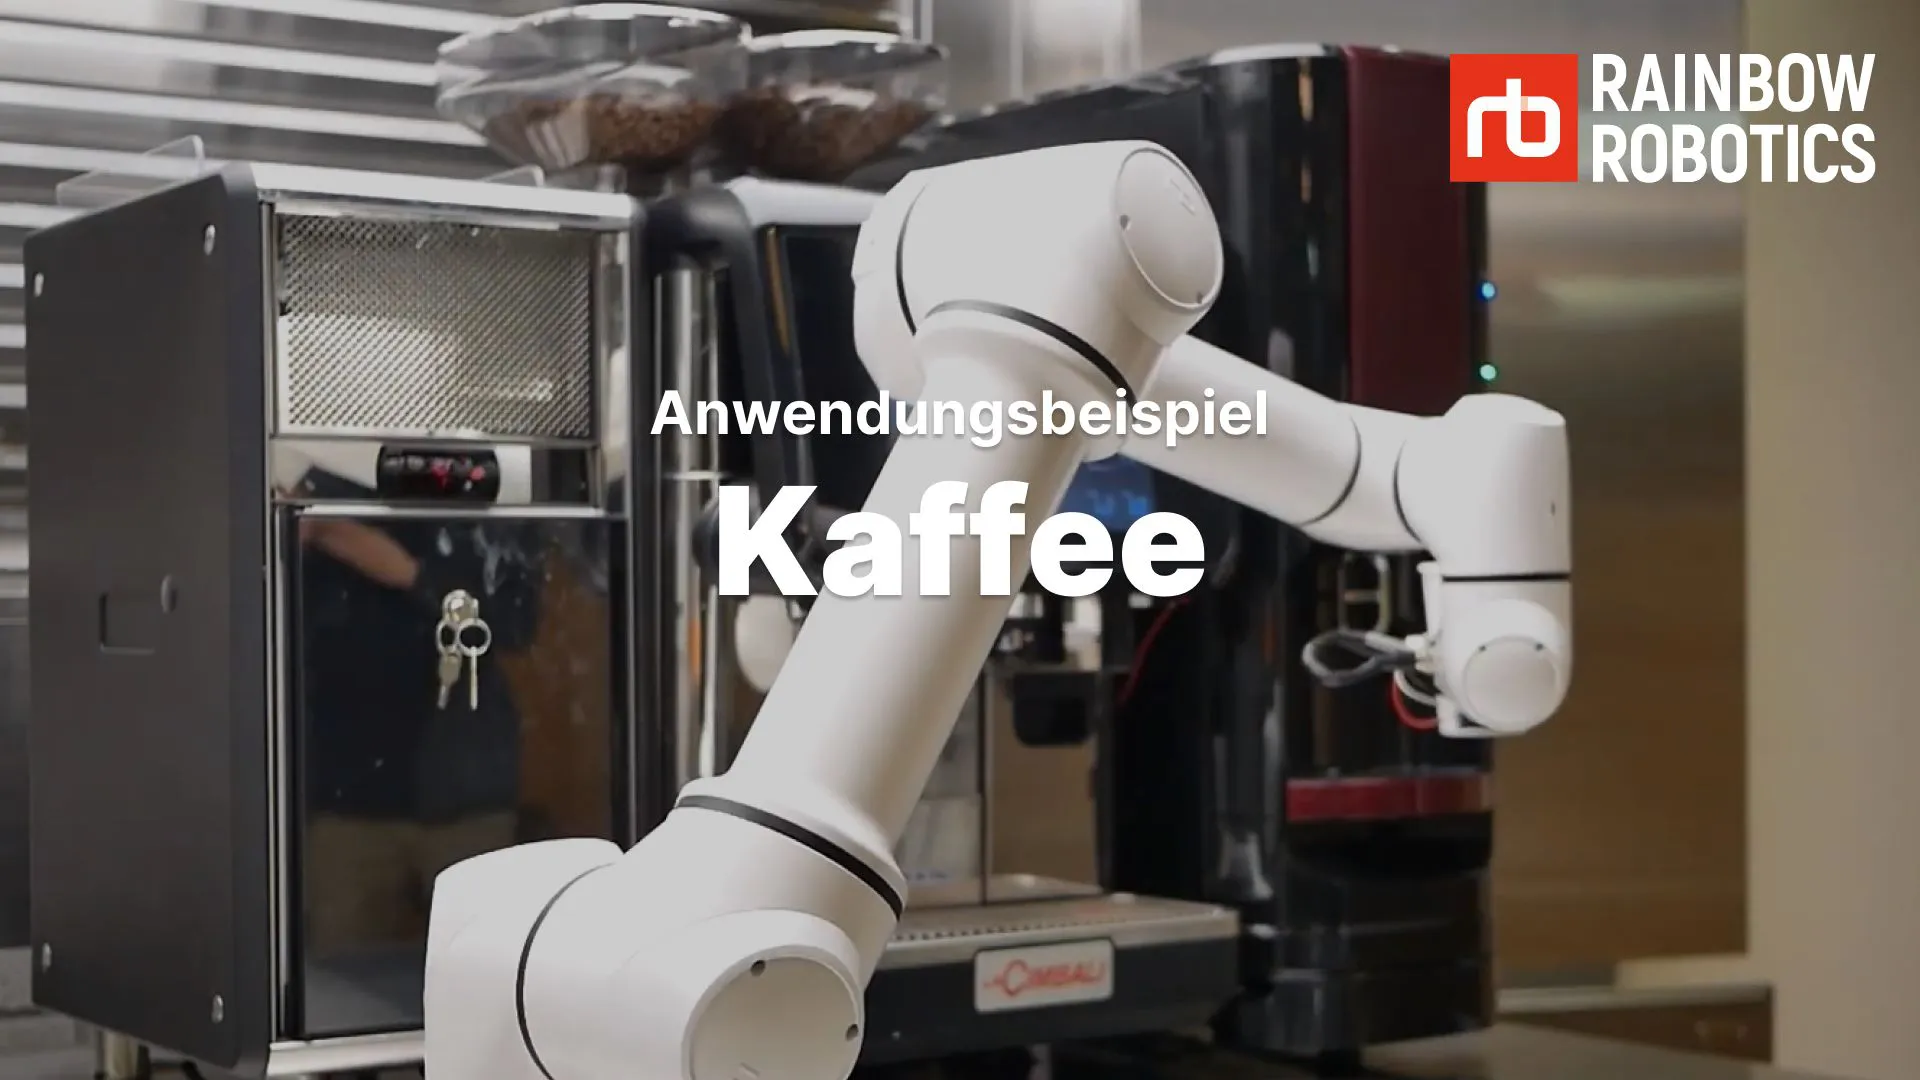 Thumbnail of Kaffee example application of Rainbow Robotics Cobots